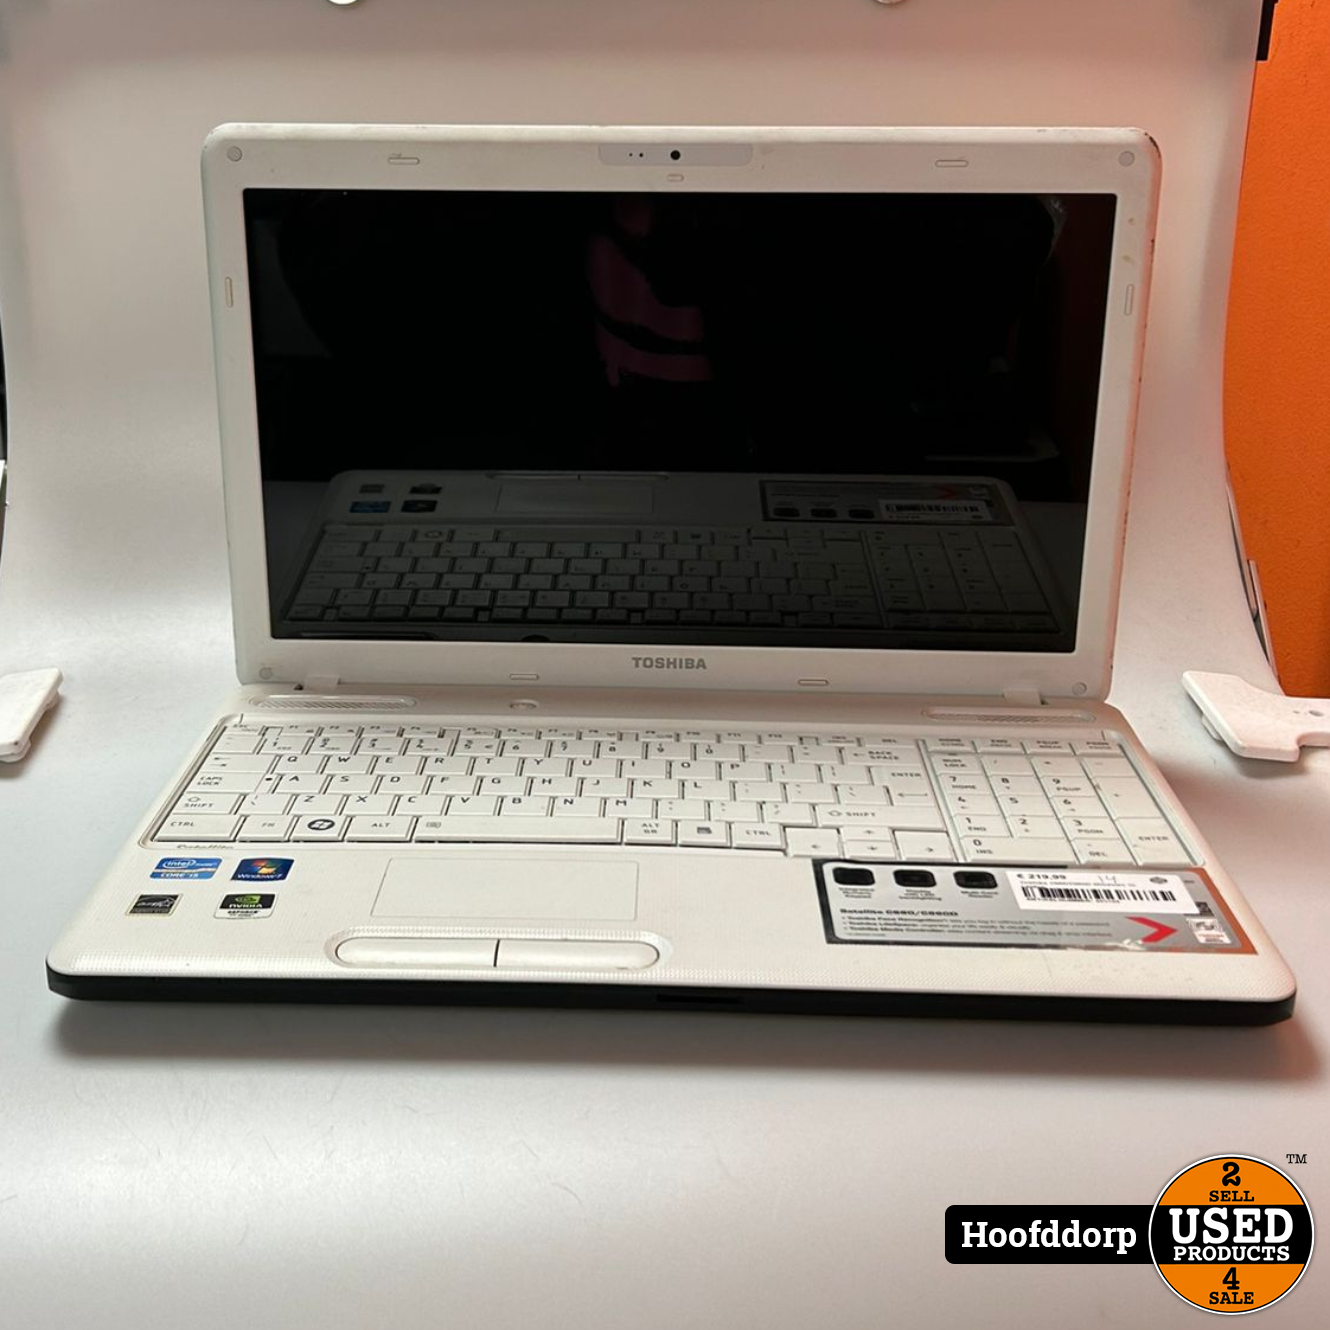 Toshiba C660/C660D Windows 10 Laptop - Products